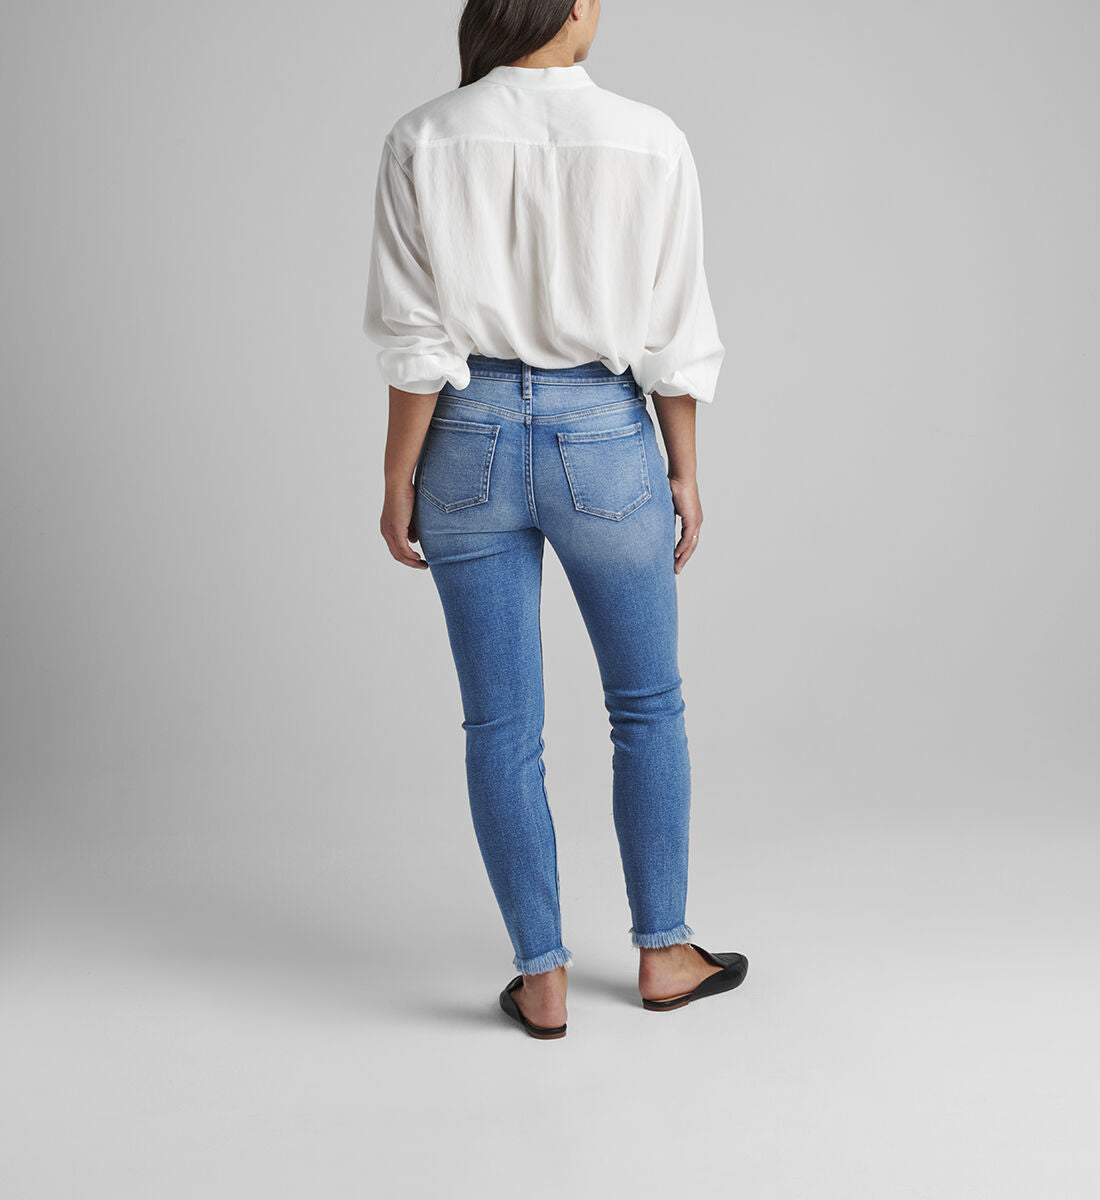 Cecilia Mid Rise Skinny Jeans - Aspen Blue Wash - FINAL SALE